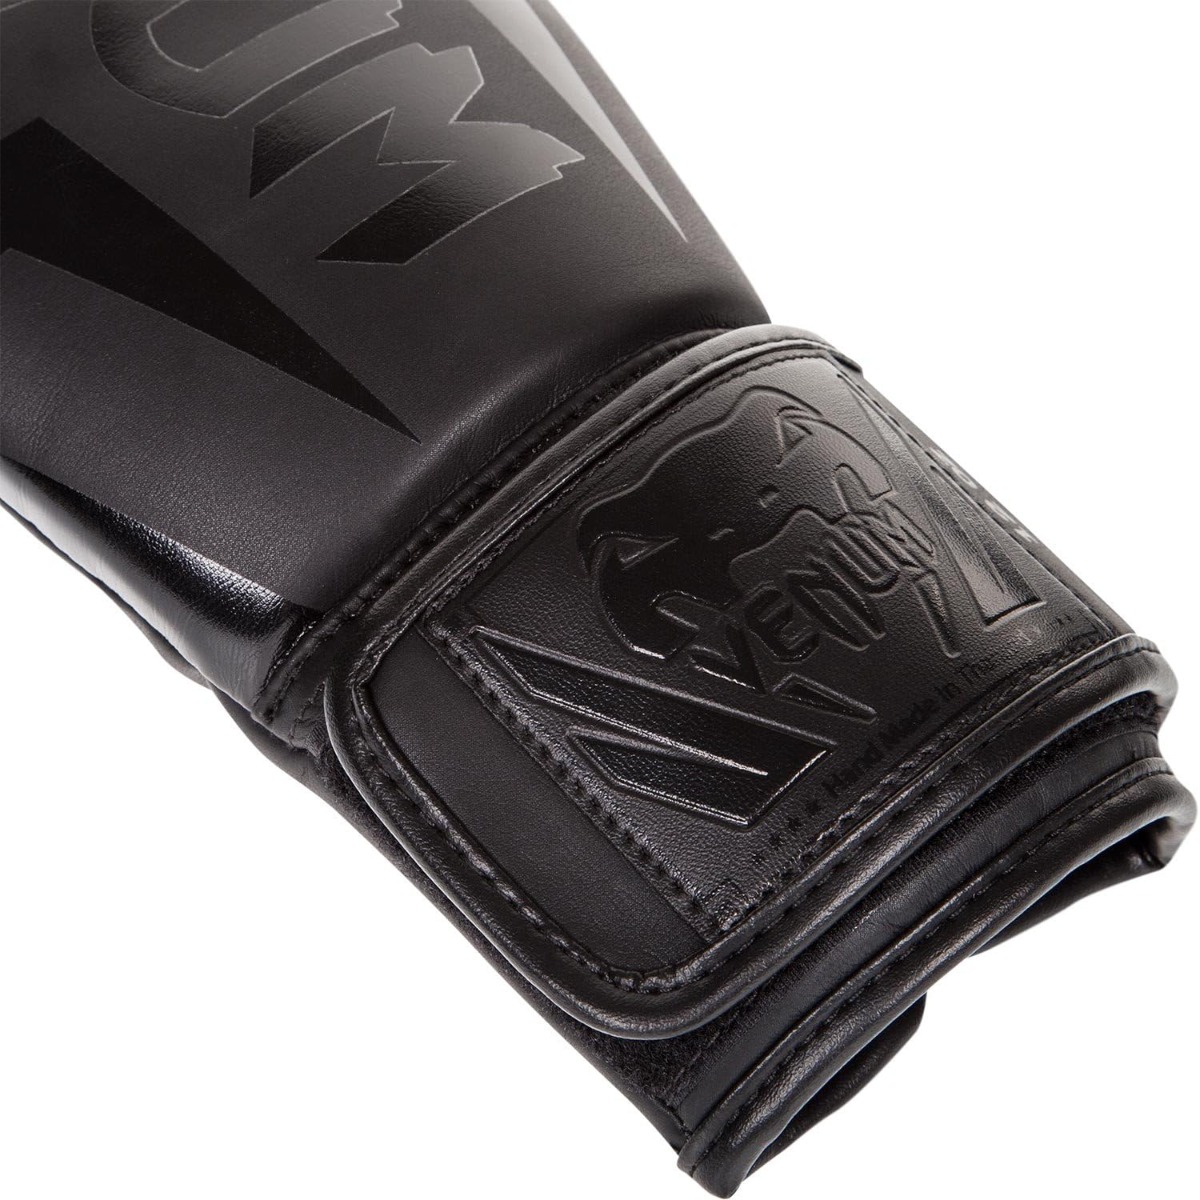 Venum Elite Boxing Gloves - Matte Black (14oz)